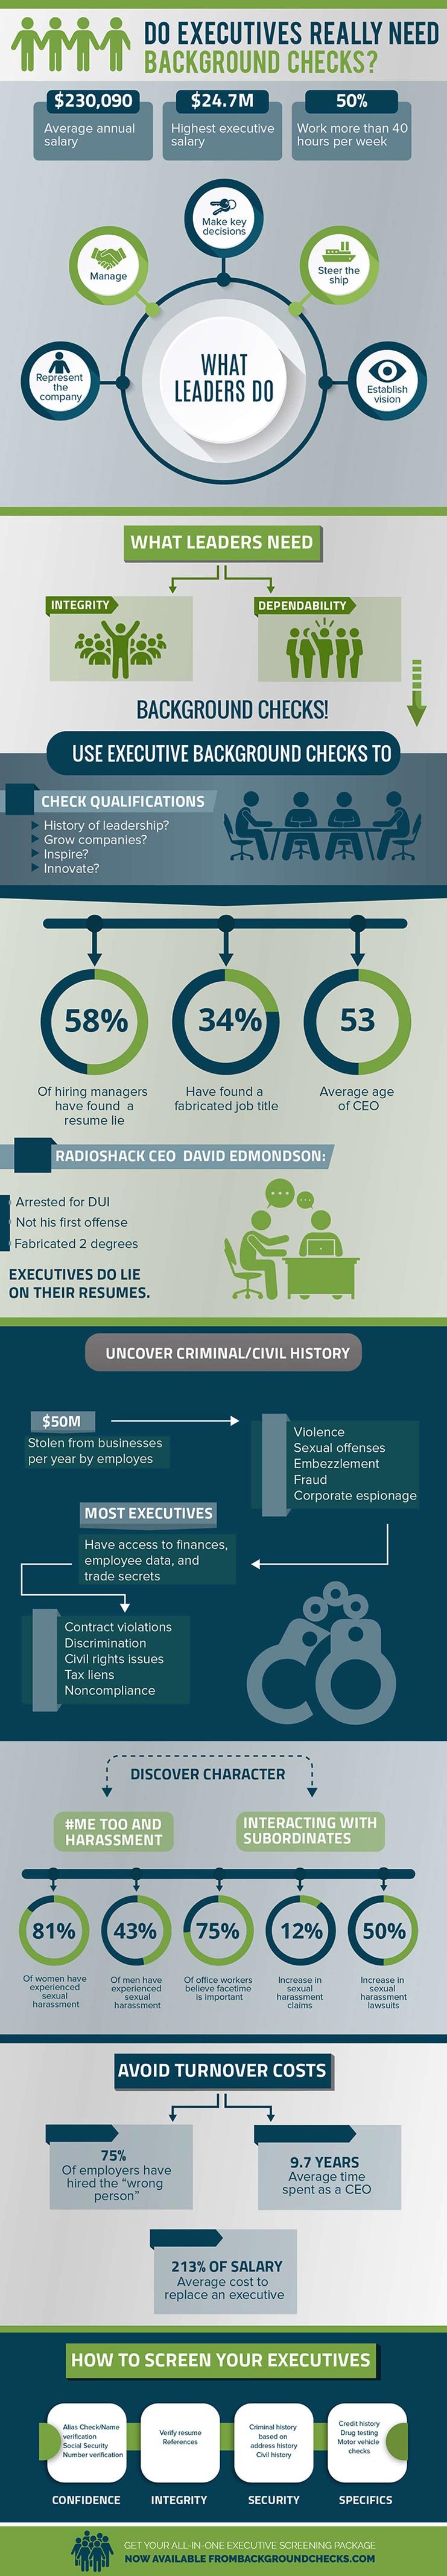 Infographic---Executive-Background-Checks-optimized